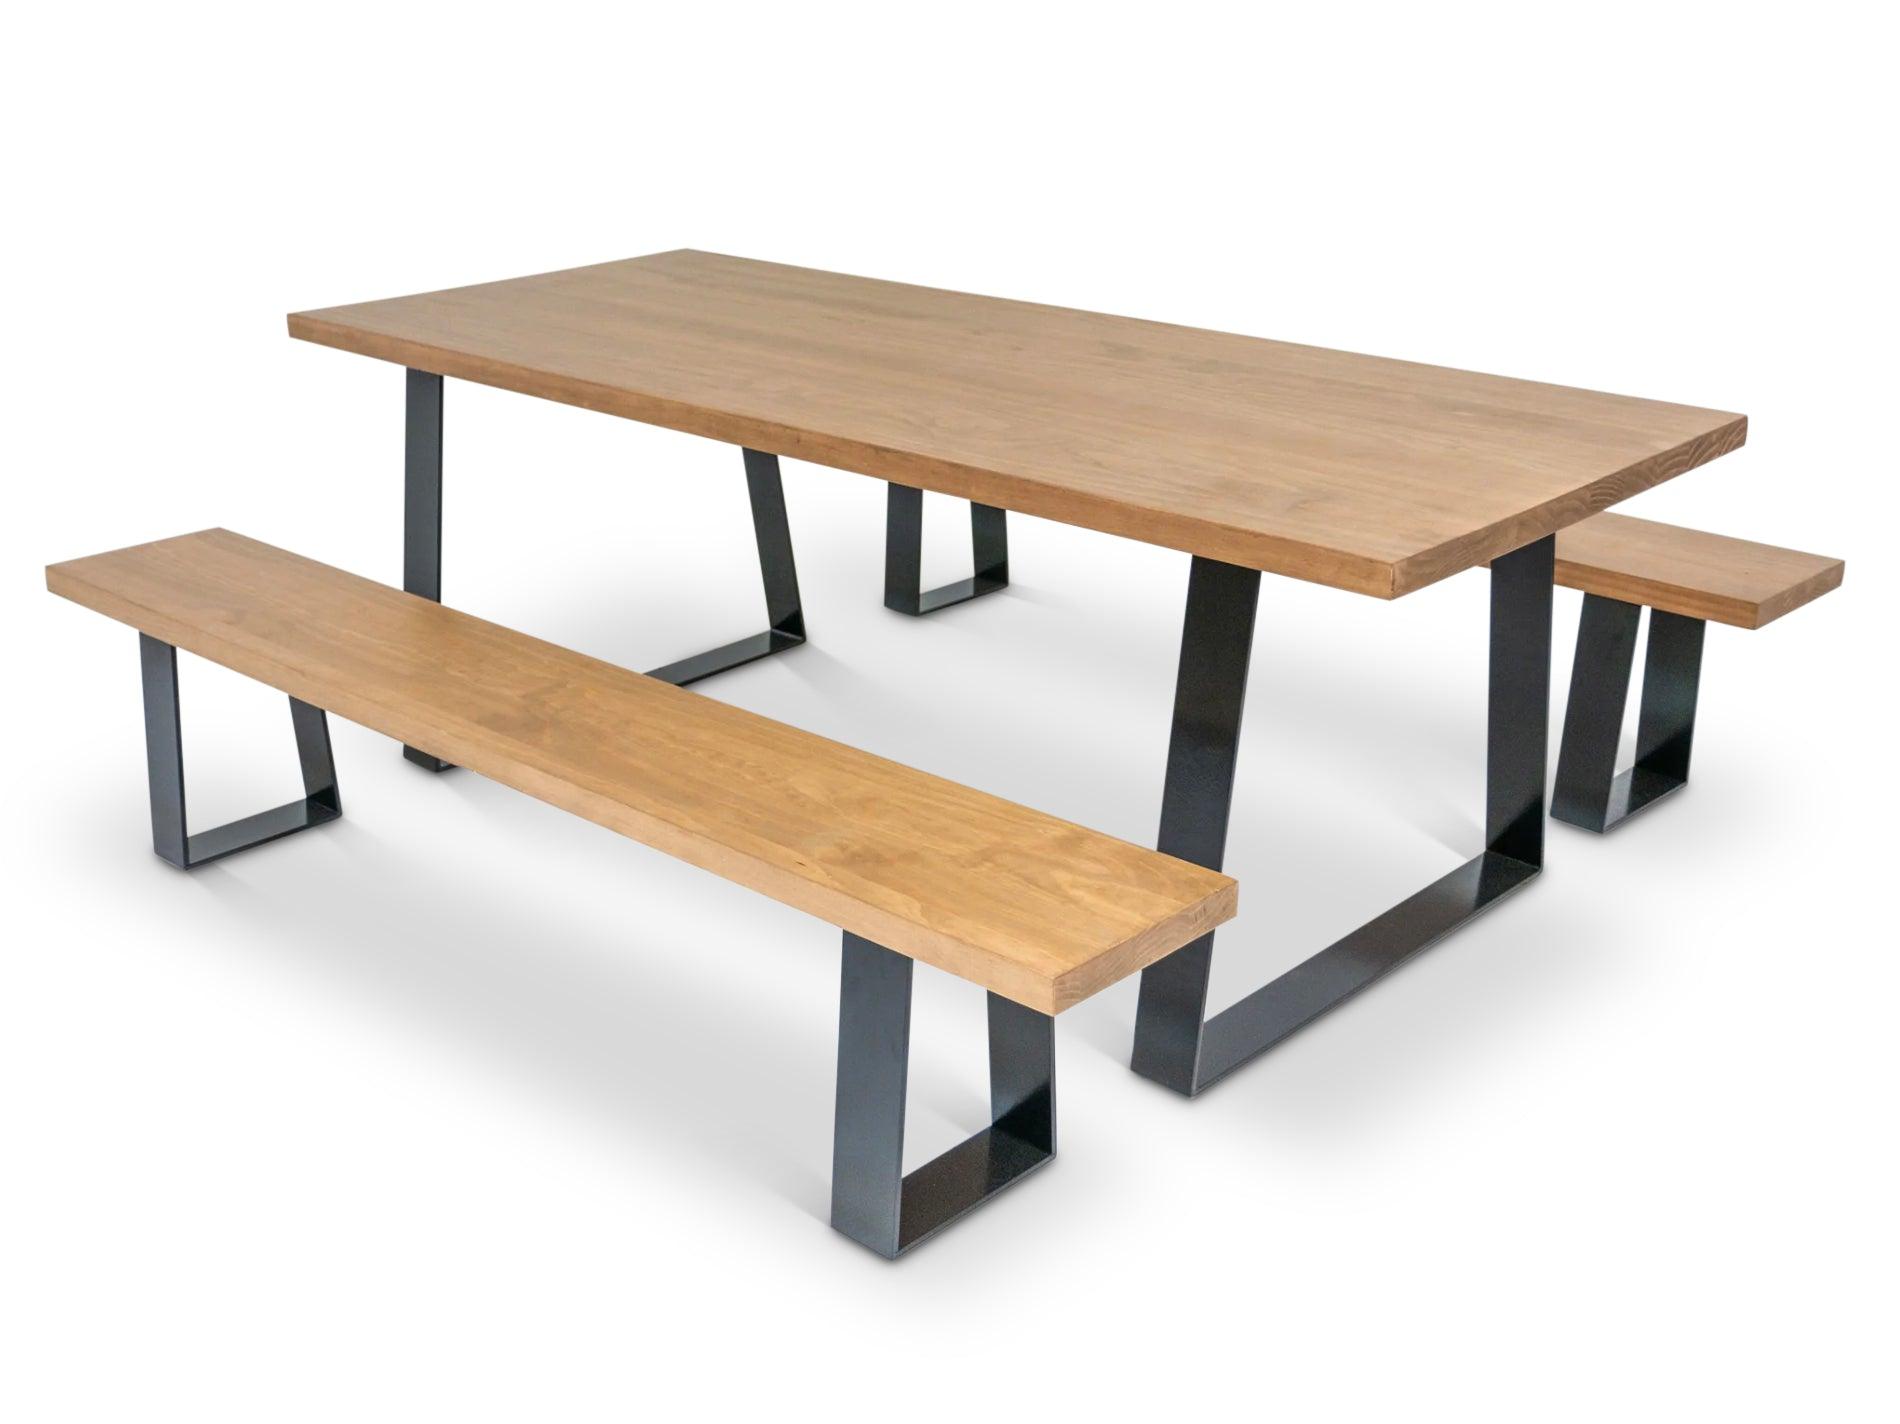 Reverse Angled Frame Dining Table - Innate Furniture